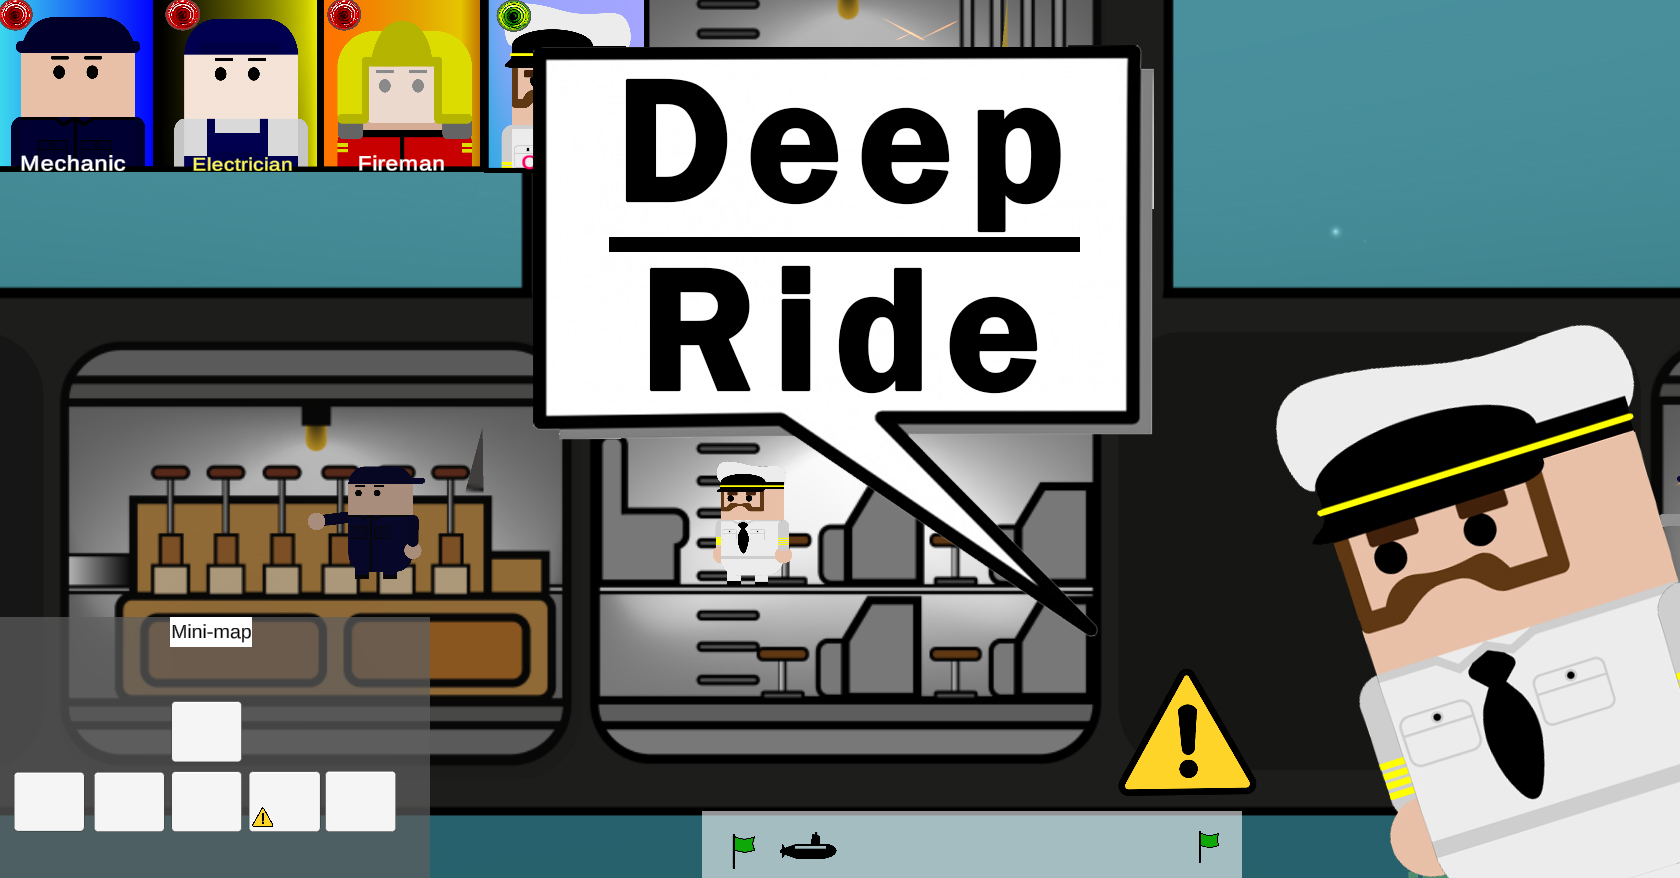 Deep ride